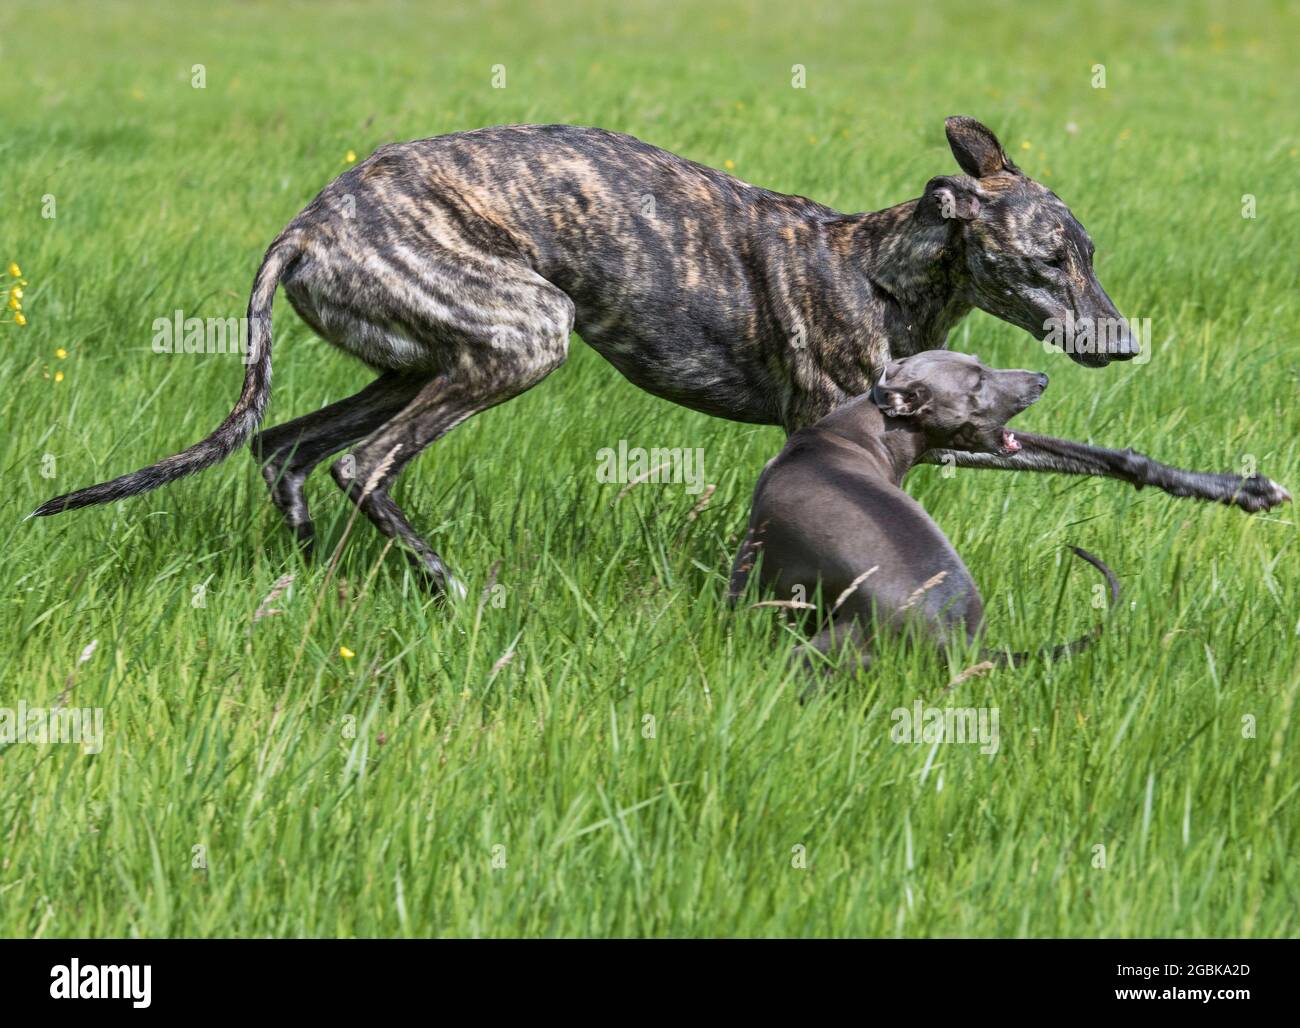 Brindled rough-coated Galgo Español / barcino Spanish galgo / Spanish sighthound and Italian Greyhound / Piccolo levriero Italiano running in field Stock Photo